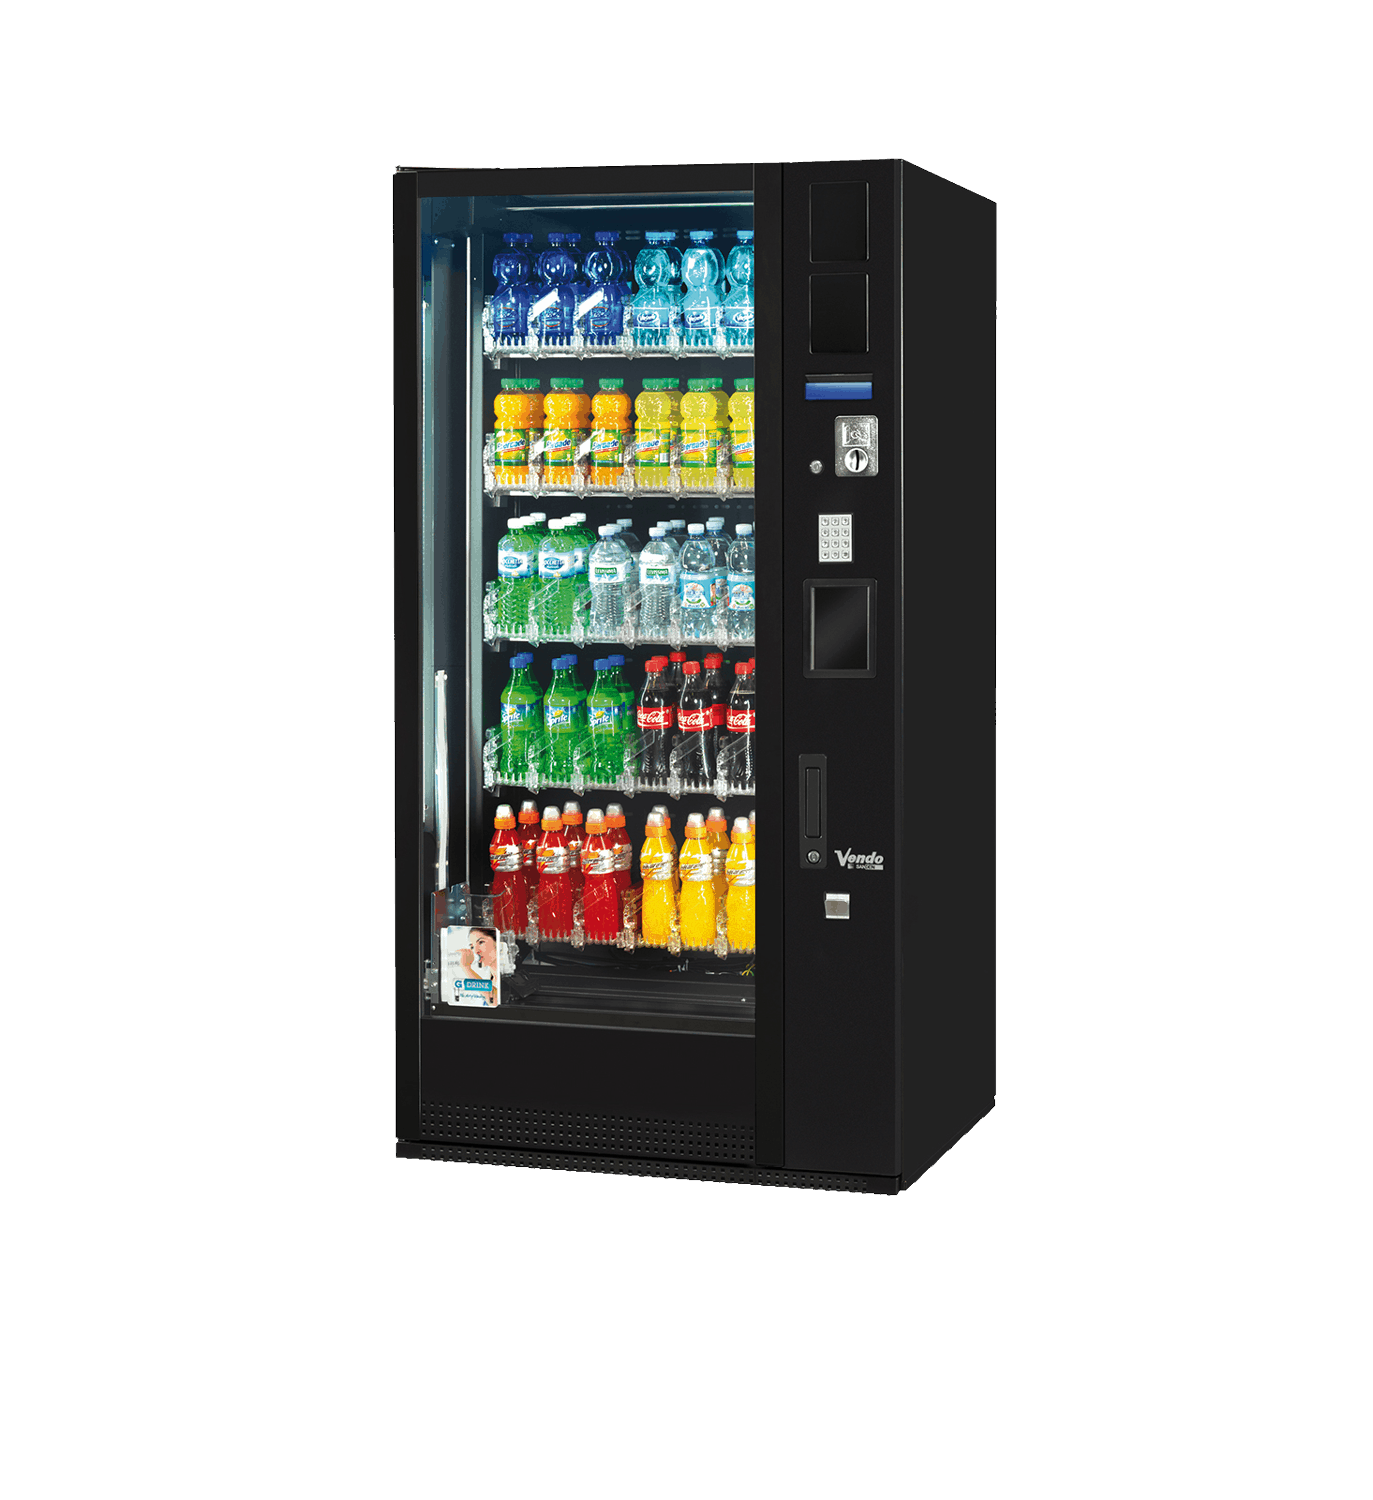 UKO Microdrink Outdoor M als Getränkeautomat